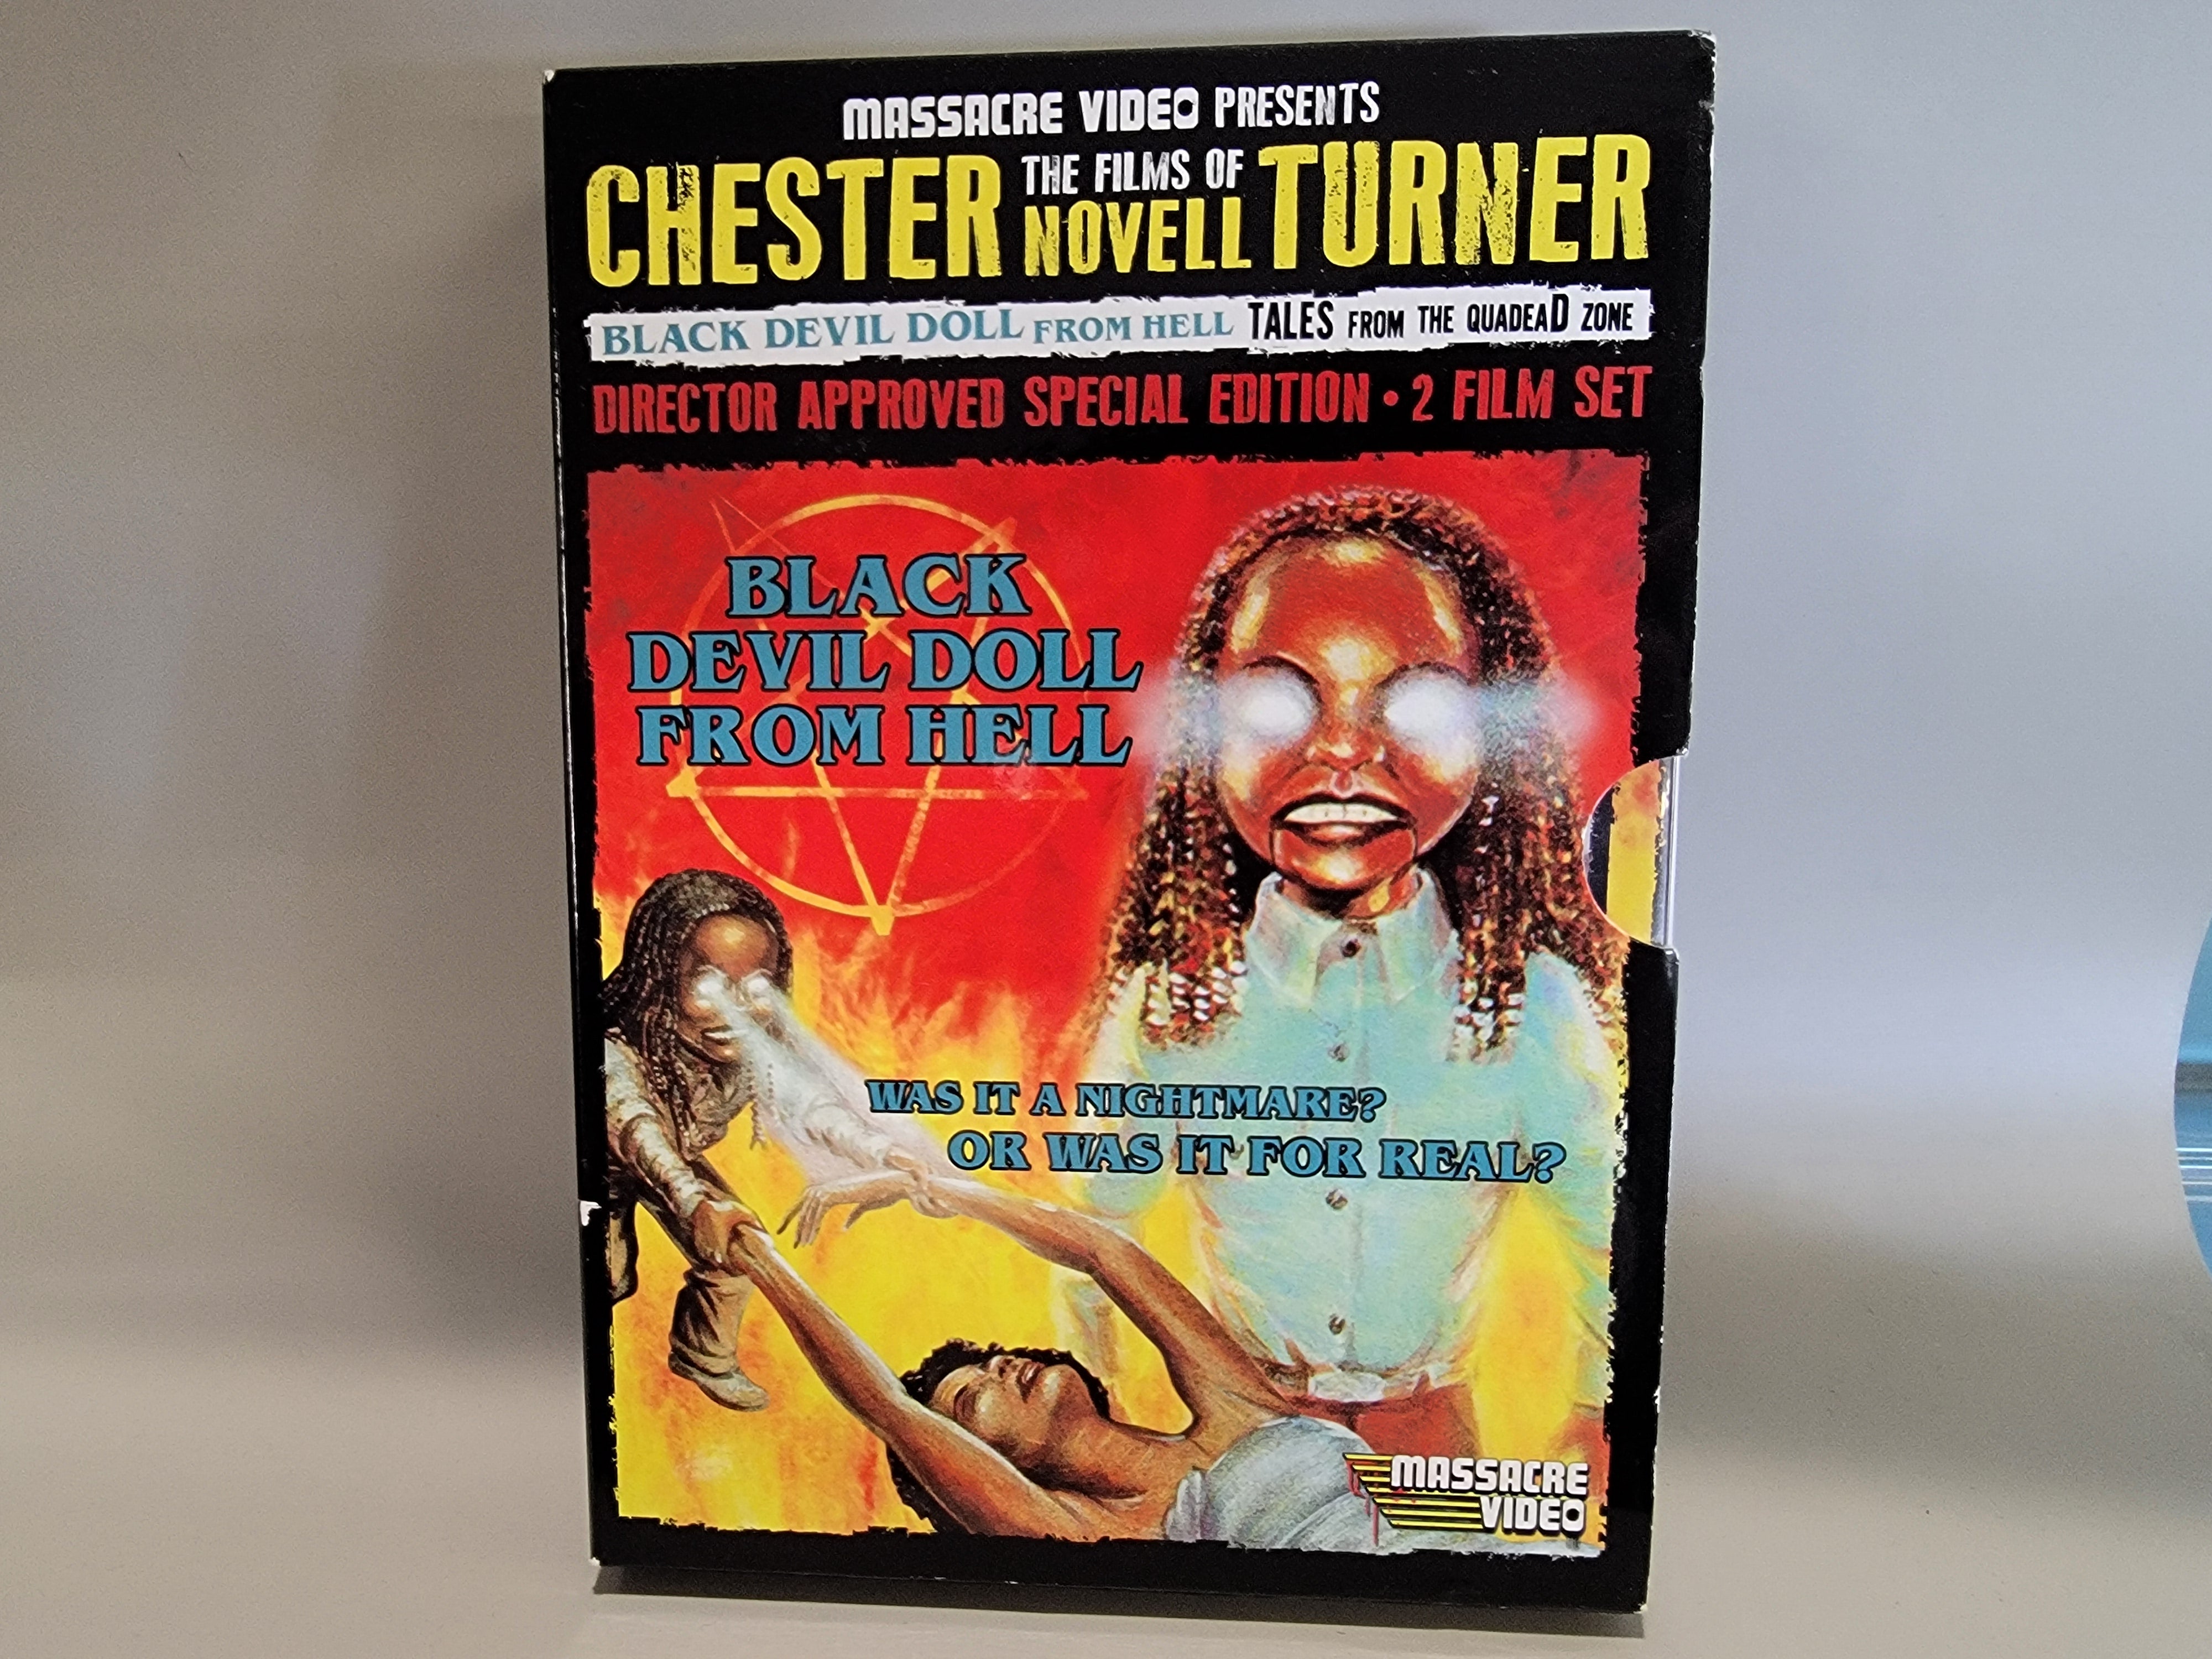 THE FILMS OF CHESTER NOVELL TURNER DVD [USED]